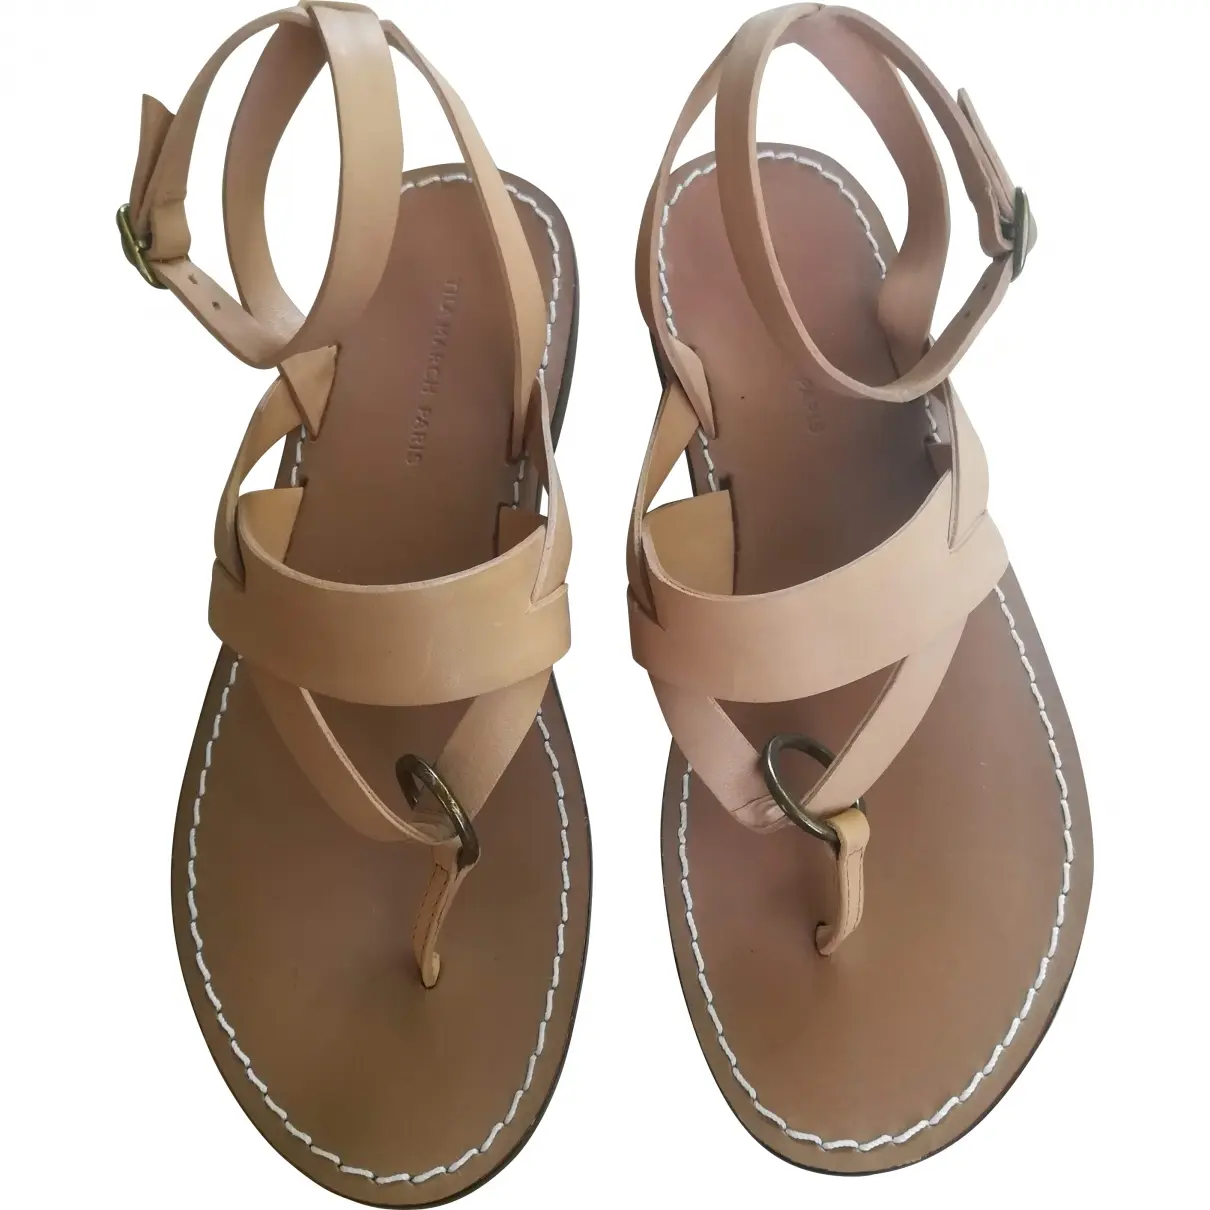 Leather sandals Tila March